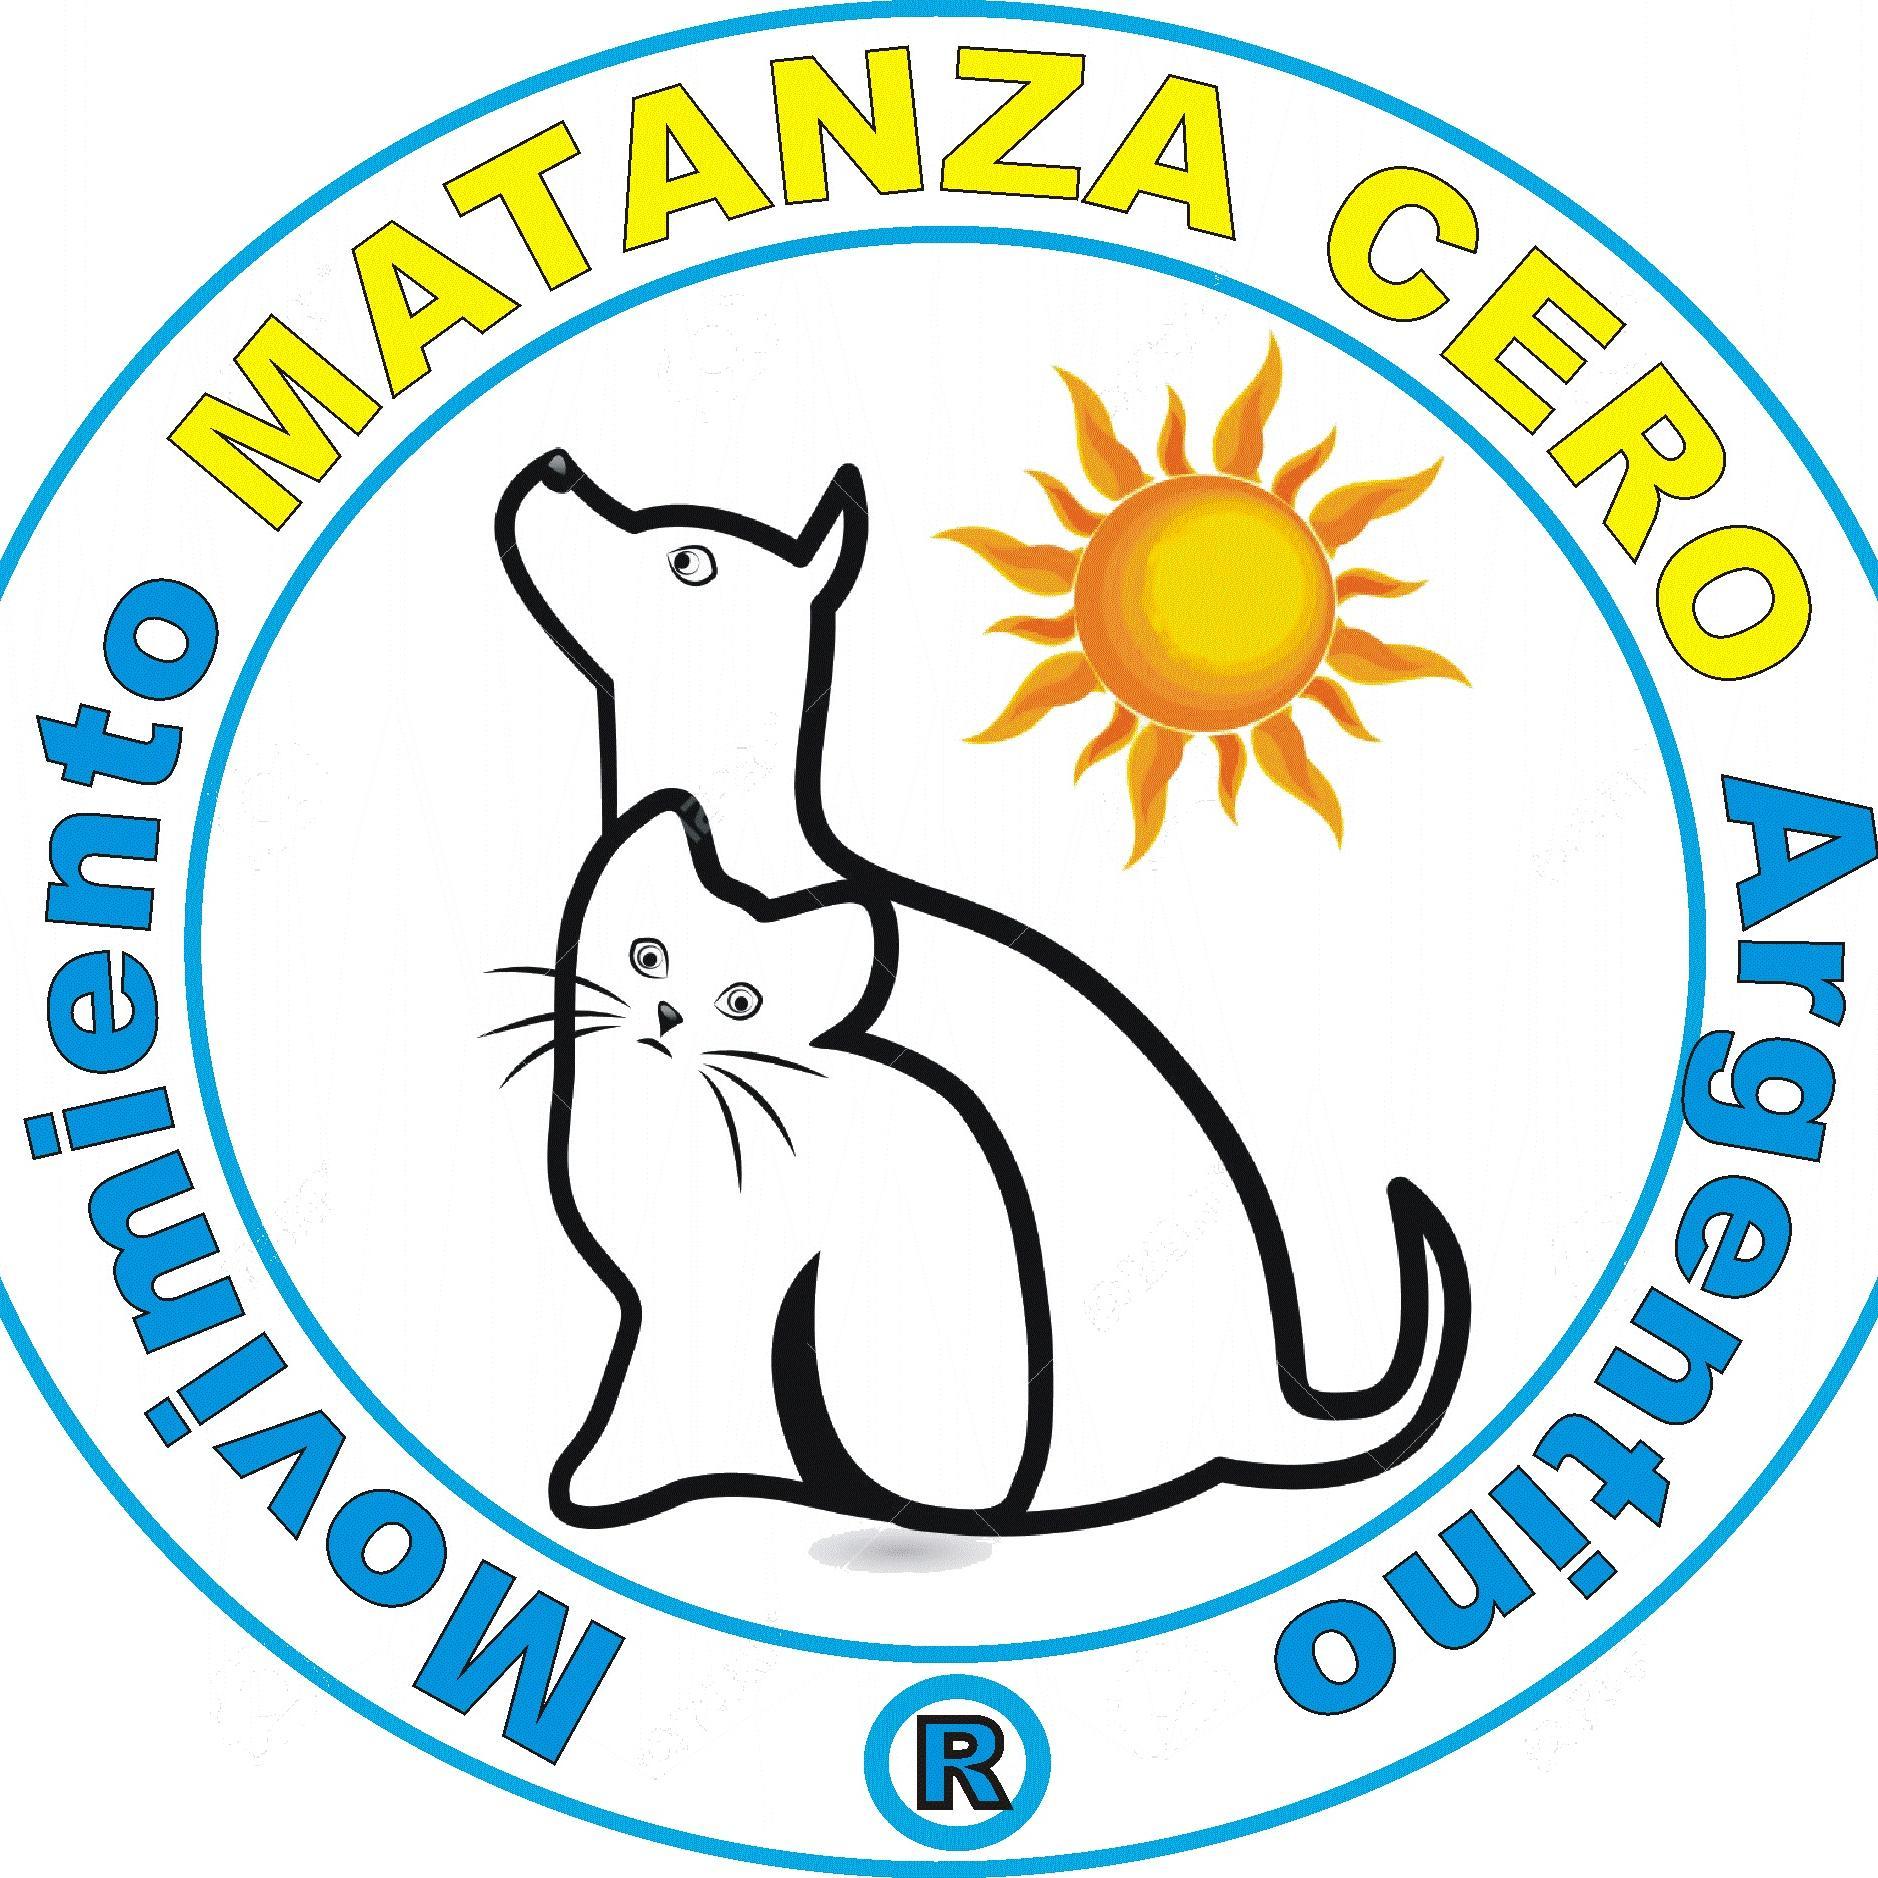 Movimiento Animalista Argentino a favor de la vida. Conocenos http://t.co/V7I8MrH9vl